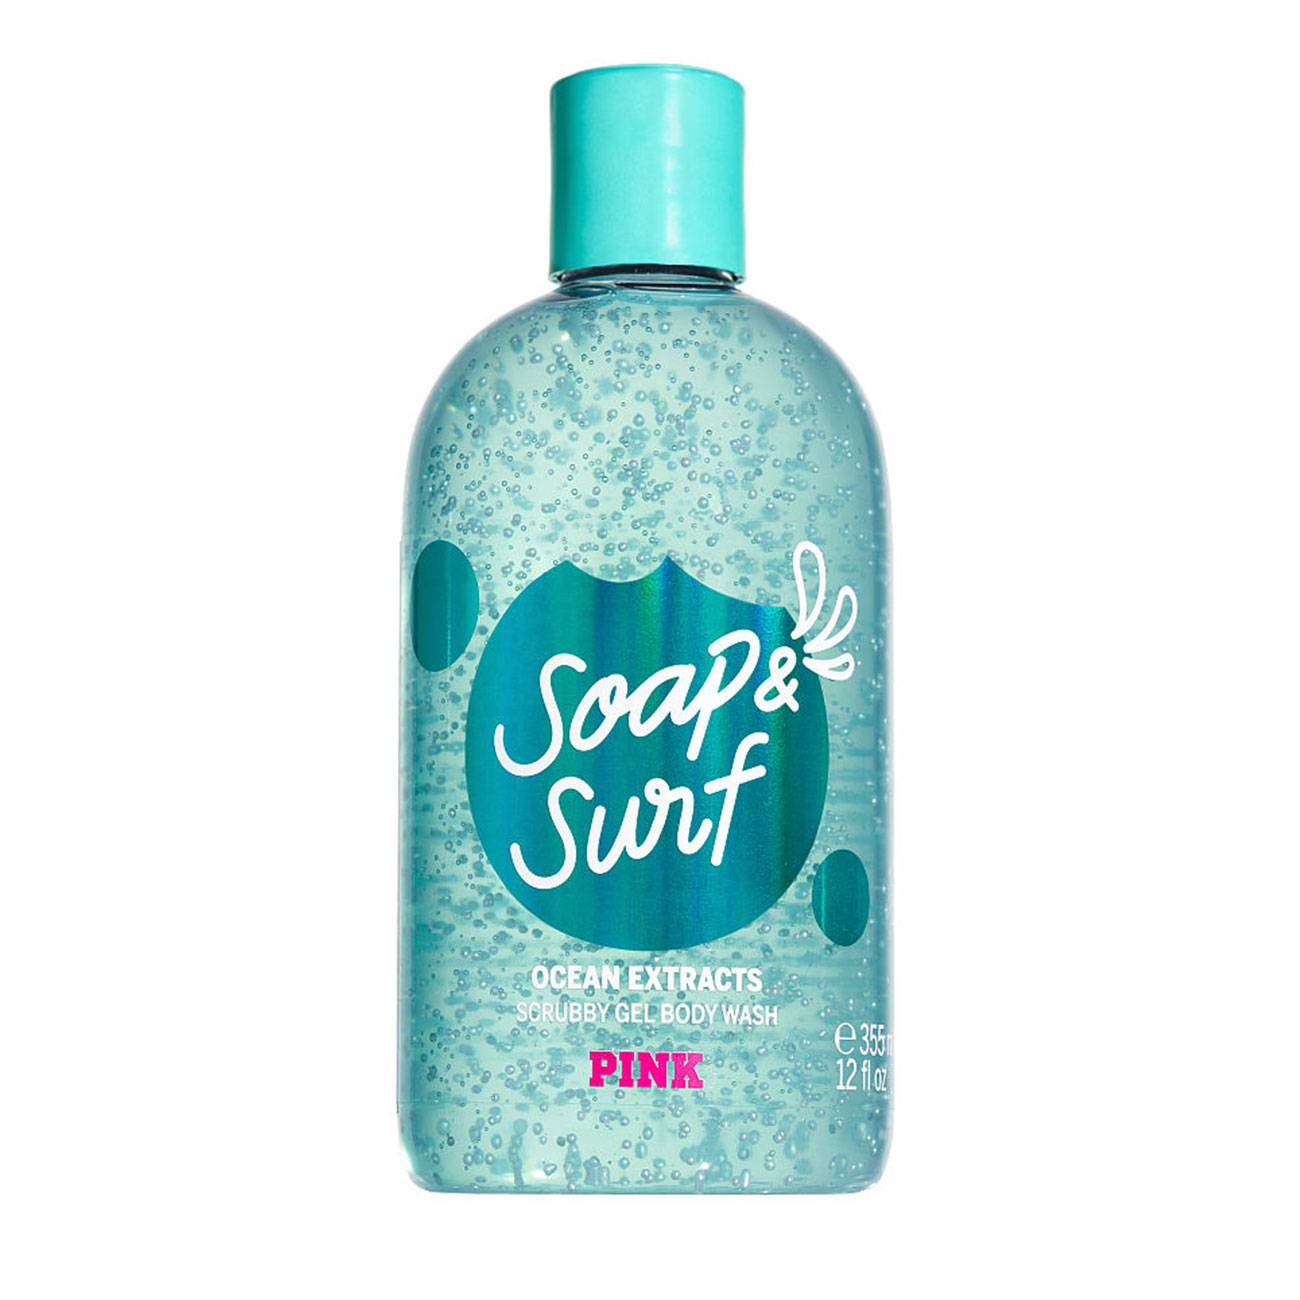 Set ingrijire corp Victoria’s Secret Soap & Surf Scrubby Gel Body Wash 355ml cu comanda online